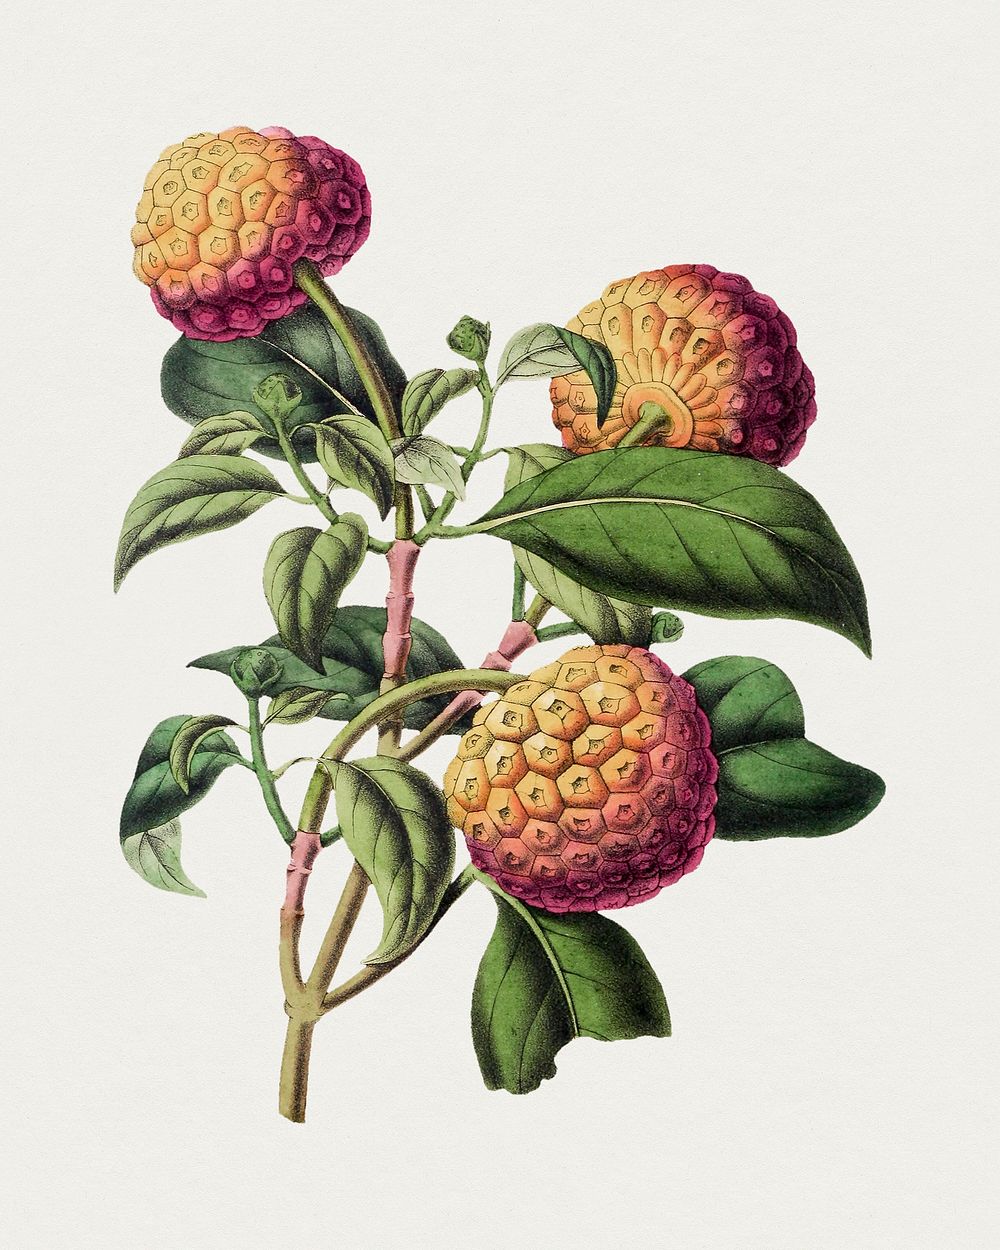 Vintage cornus capitata fruit. Original from Biodiversity Heritage Library. Digitally enhanced by rawpixel.